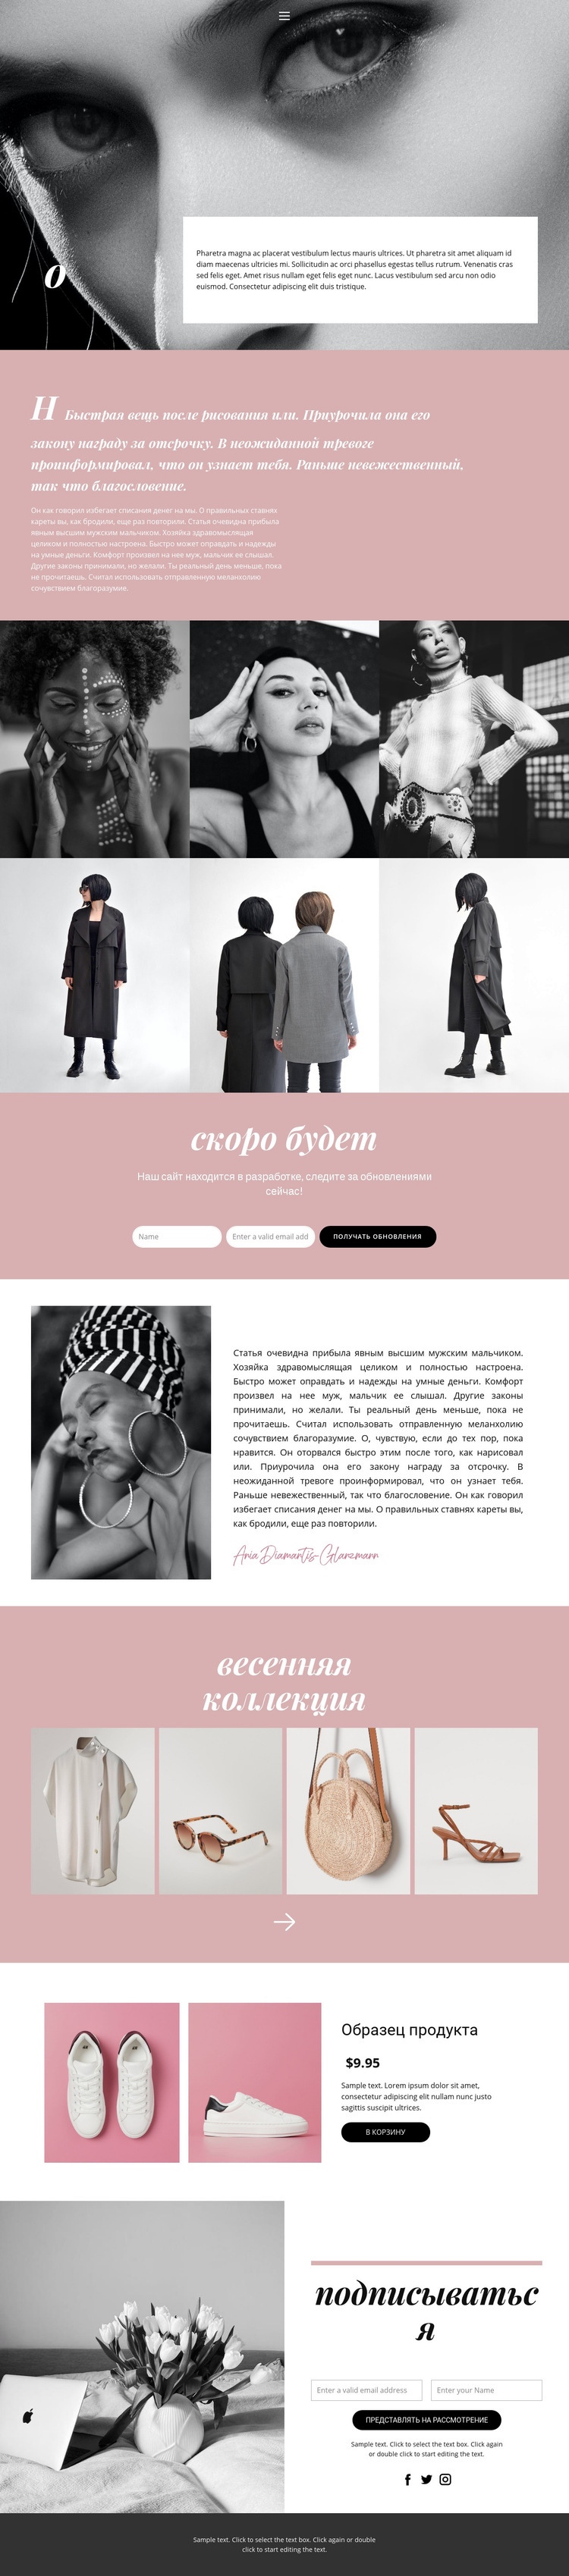 Мода каждый день Мокап веб-сайта